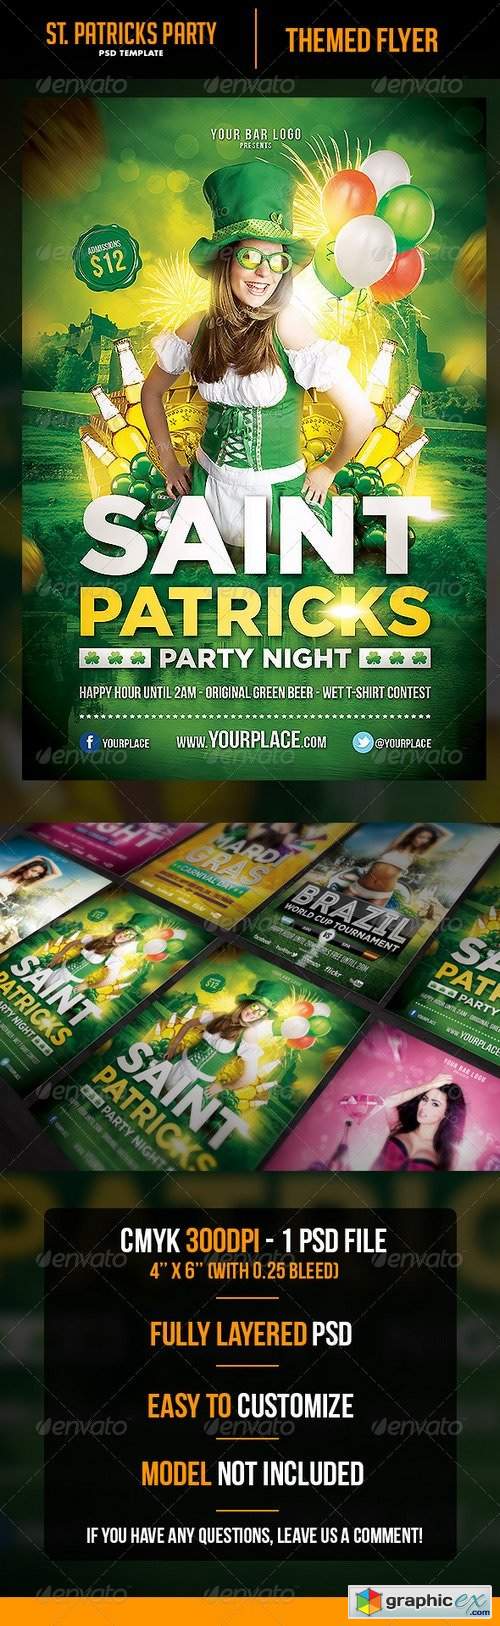 Saint Patricks Party Night Flyer Template